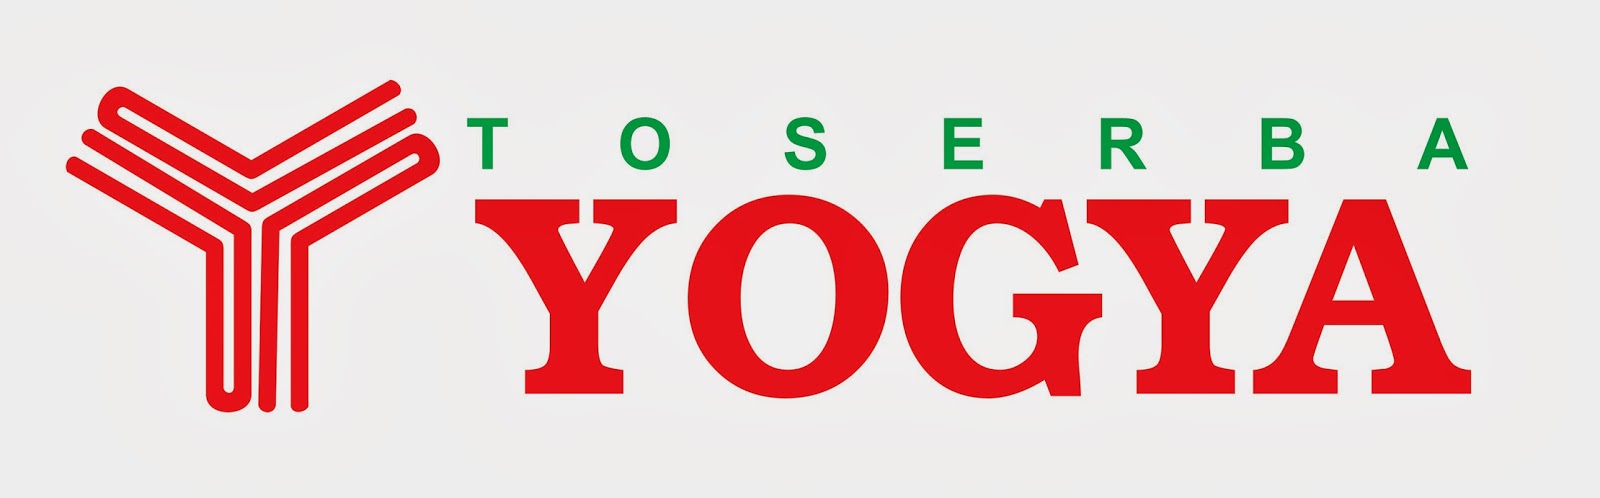 Logo Yogya Toserba desainfarhan.blogspot.com